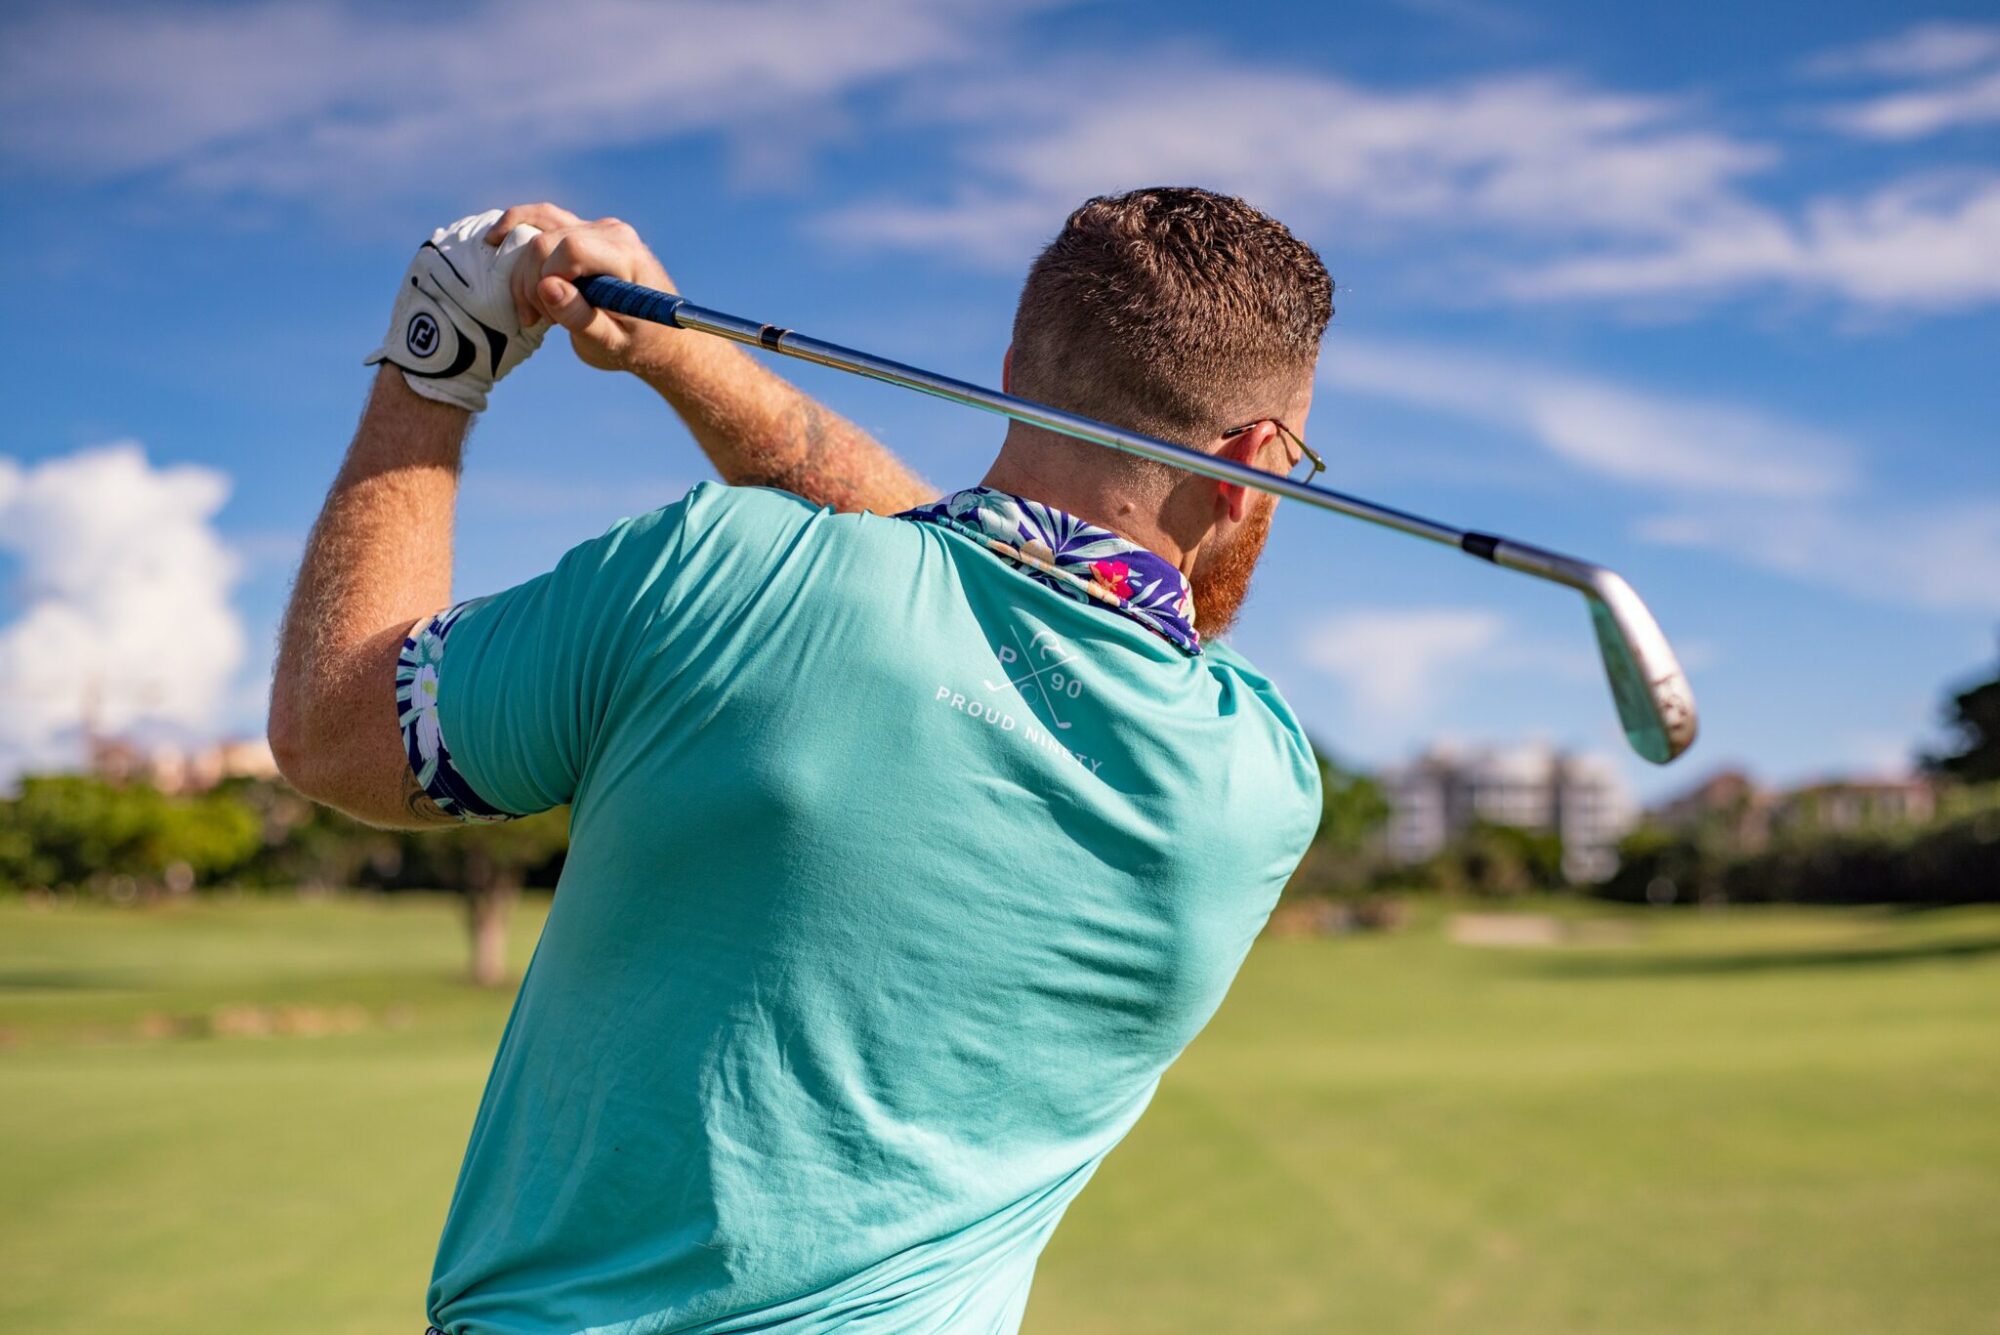 Man enjoying a round of golf on a beautiful day